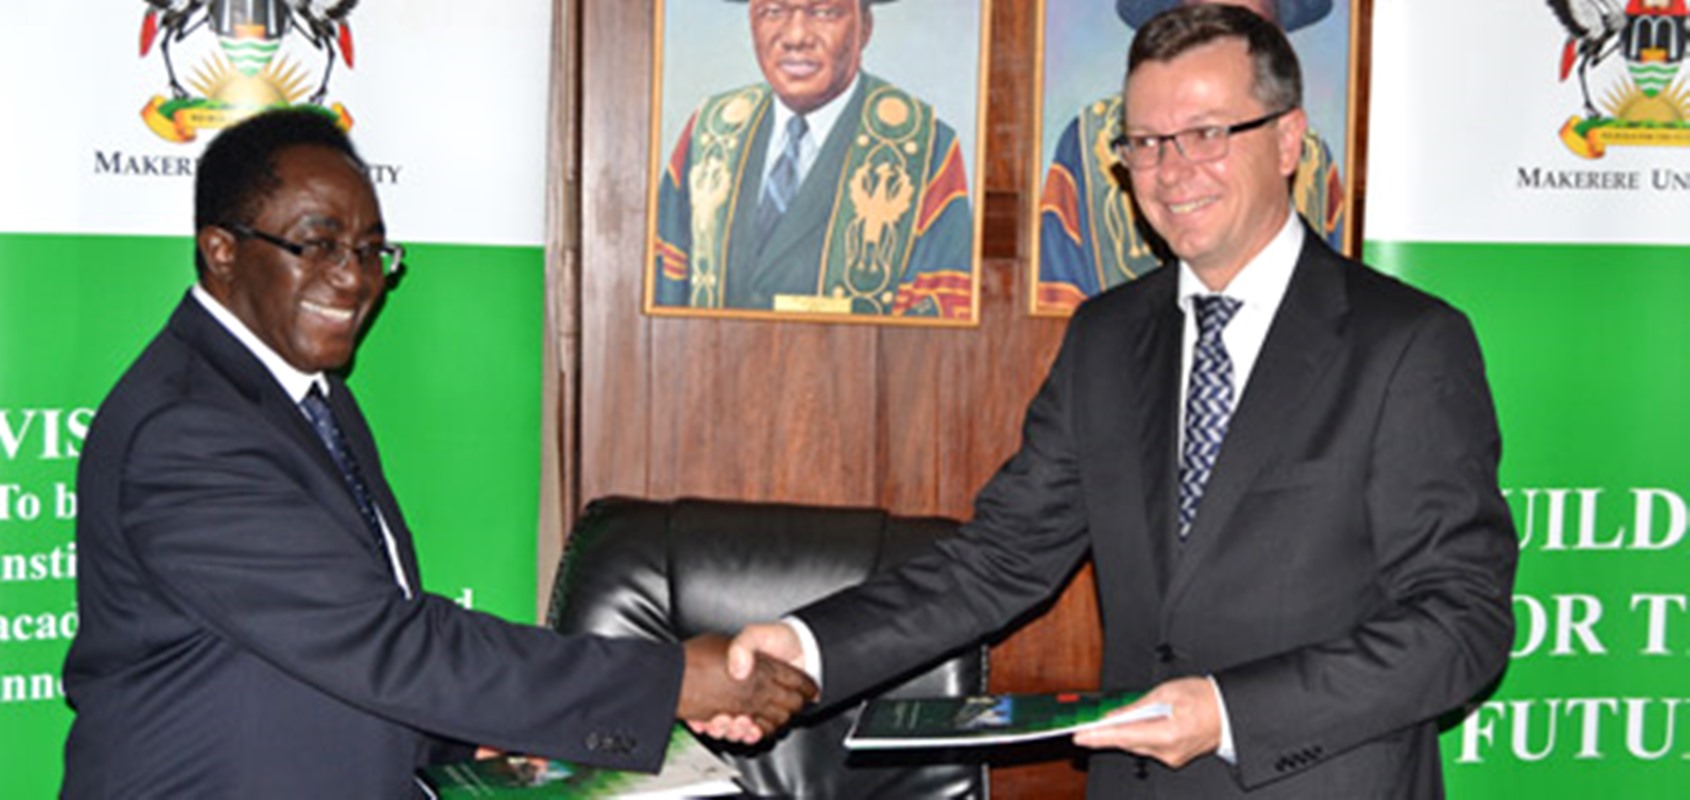 The Vice Chancellor Makerere University Prof. John Ddumba-Ssentamu (L) exchanges the signed Frame Agreement with The Rector University of Bergen, Prof. Dag Rune Olsen on 30th September 2014 at Makerere University.